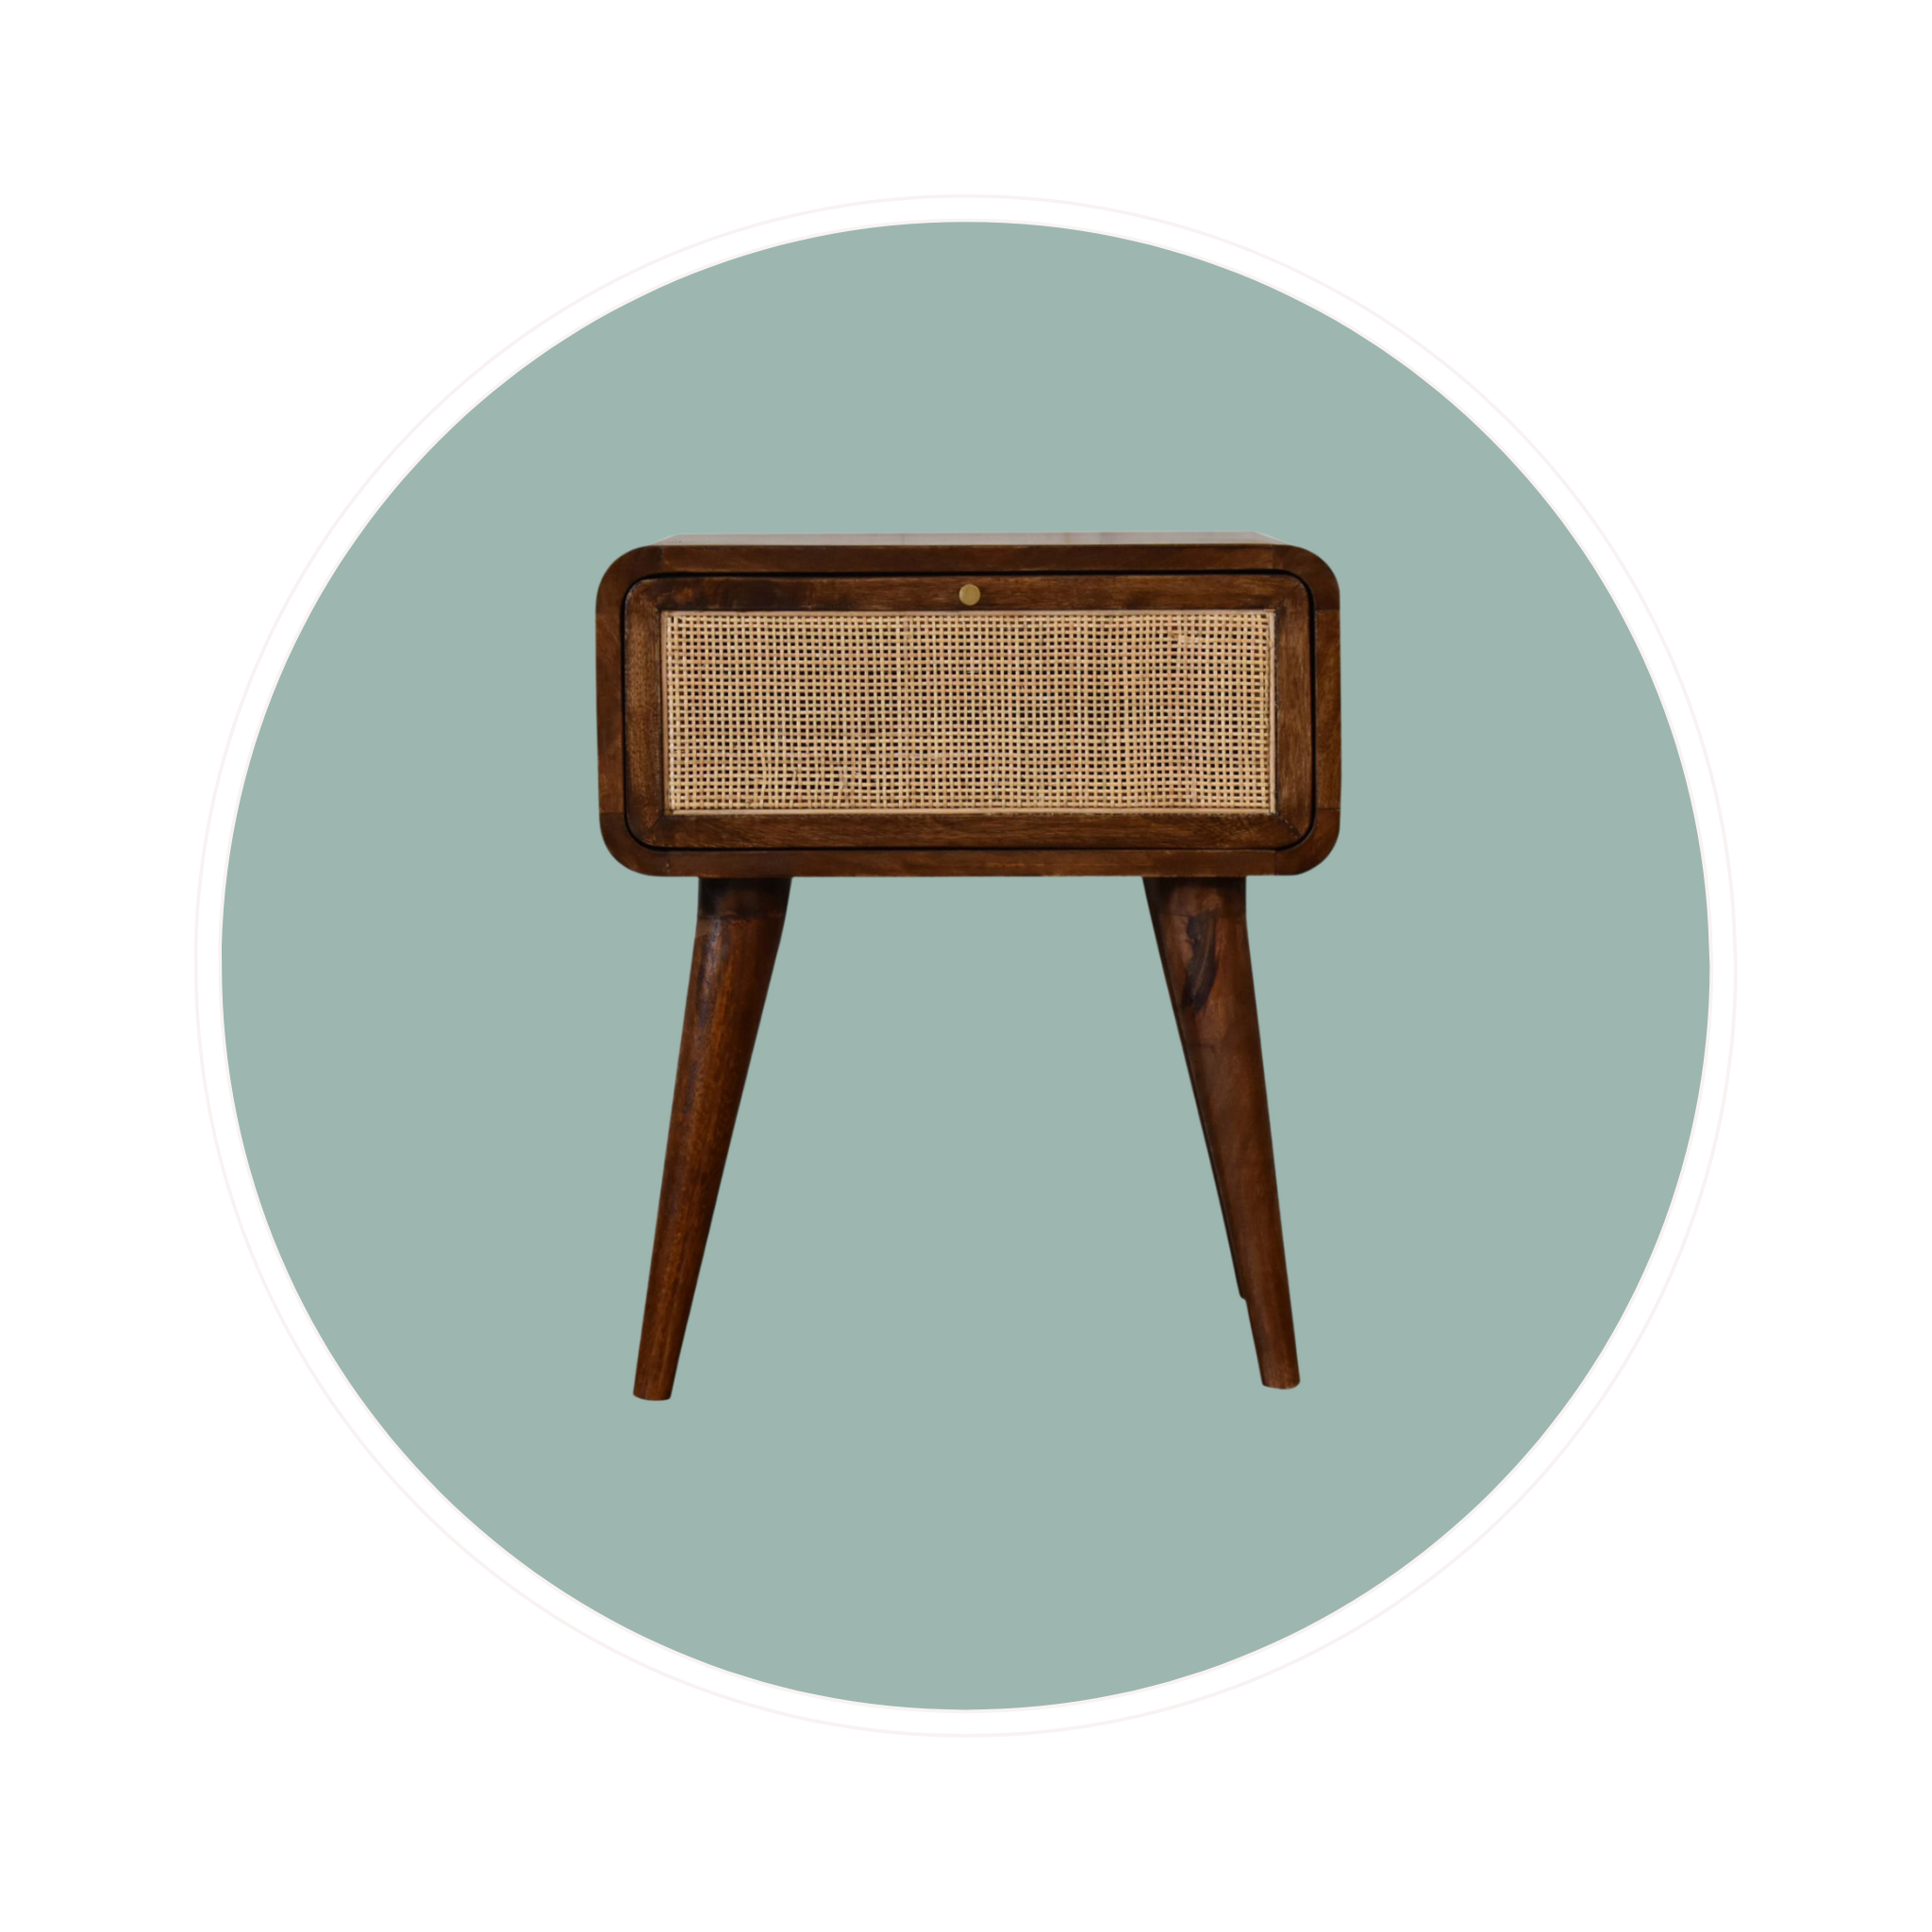 Jaya Handmade solid wood bedside table in deep chestnut with woven drawer frontal | MalletandPlane.com